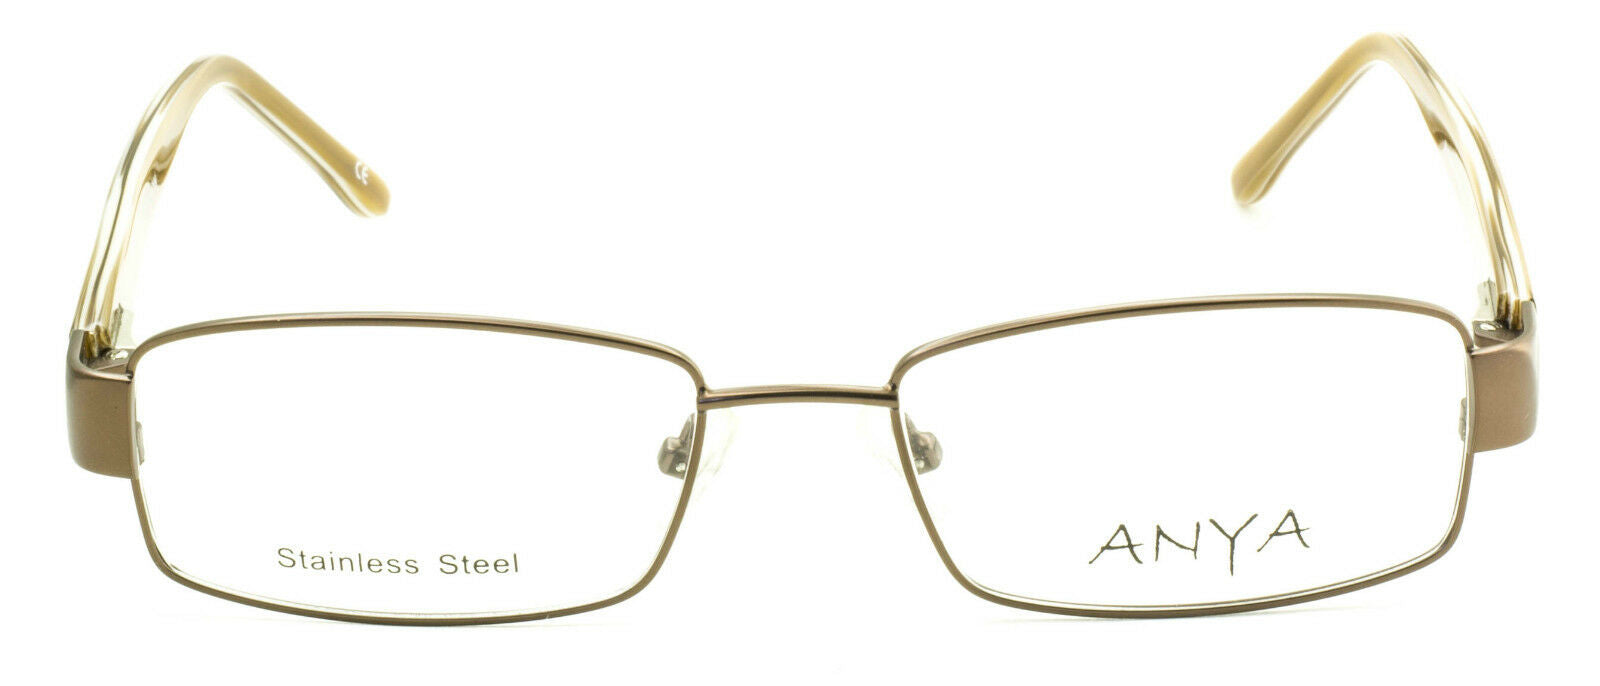 ANYA KL 1069 C4 RX Optical FRAMES - NEW Glasses Eyewear Eyeglasses - TRUSTED